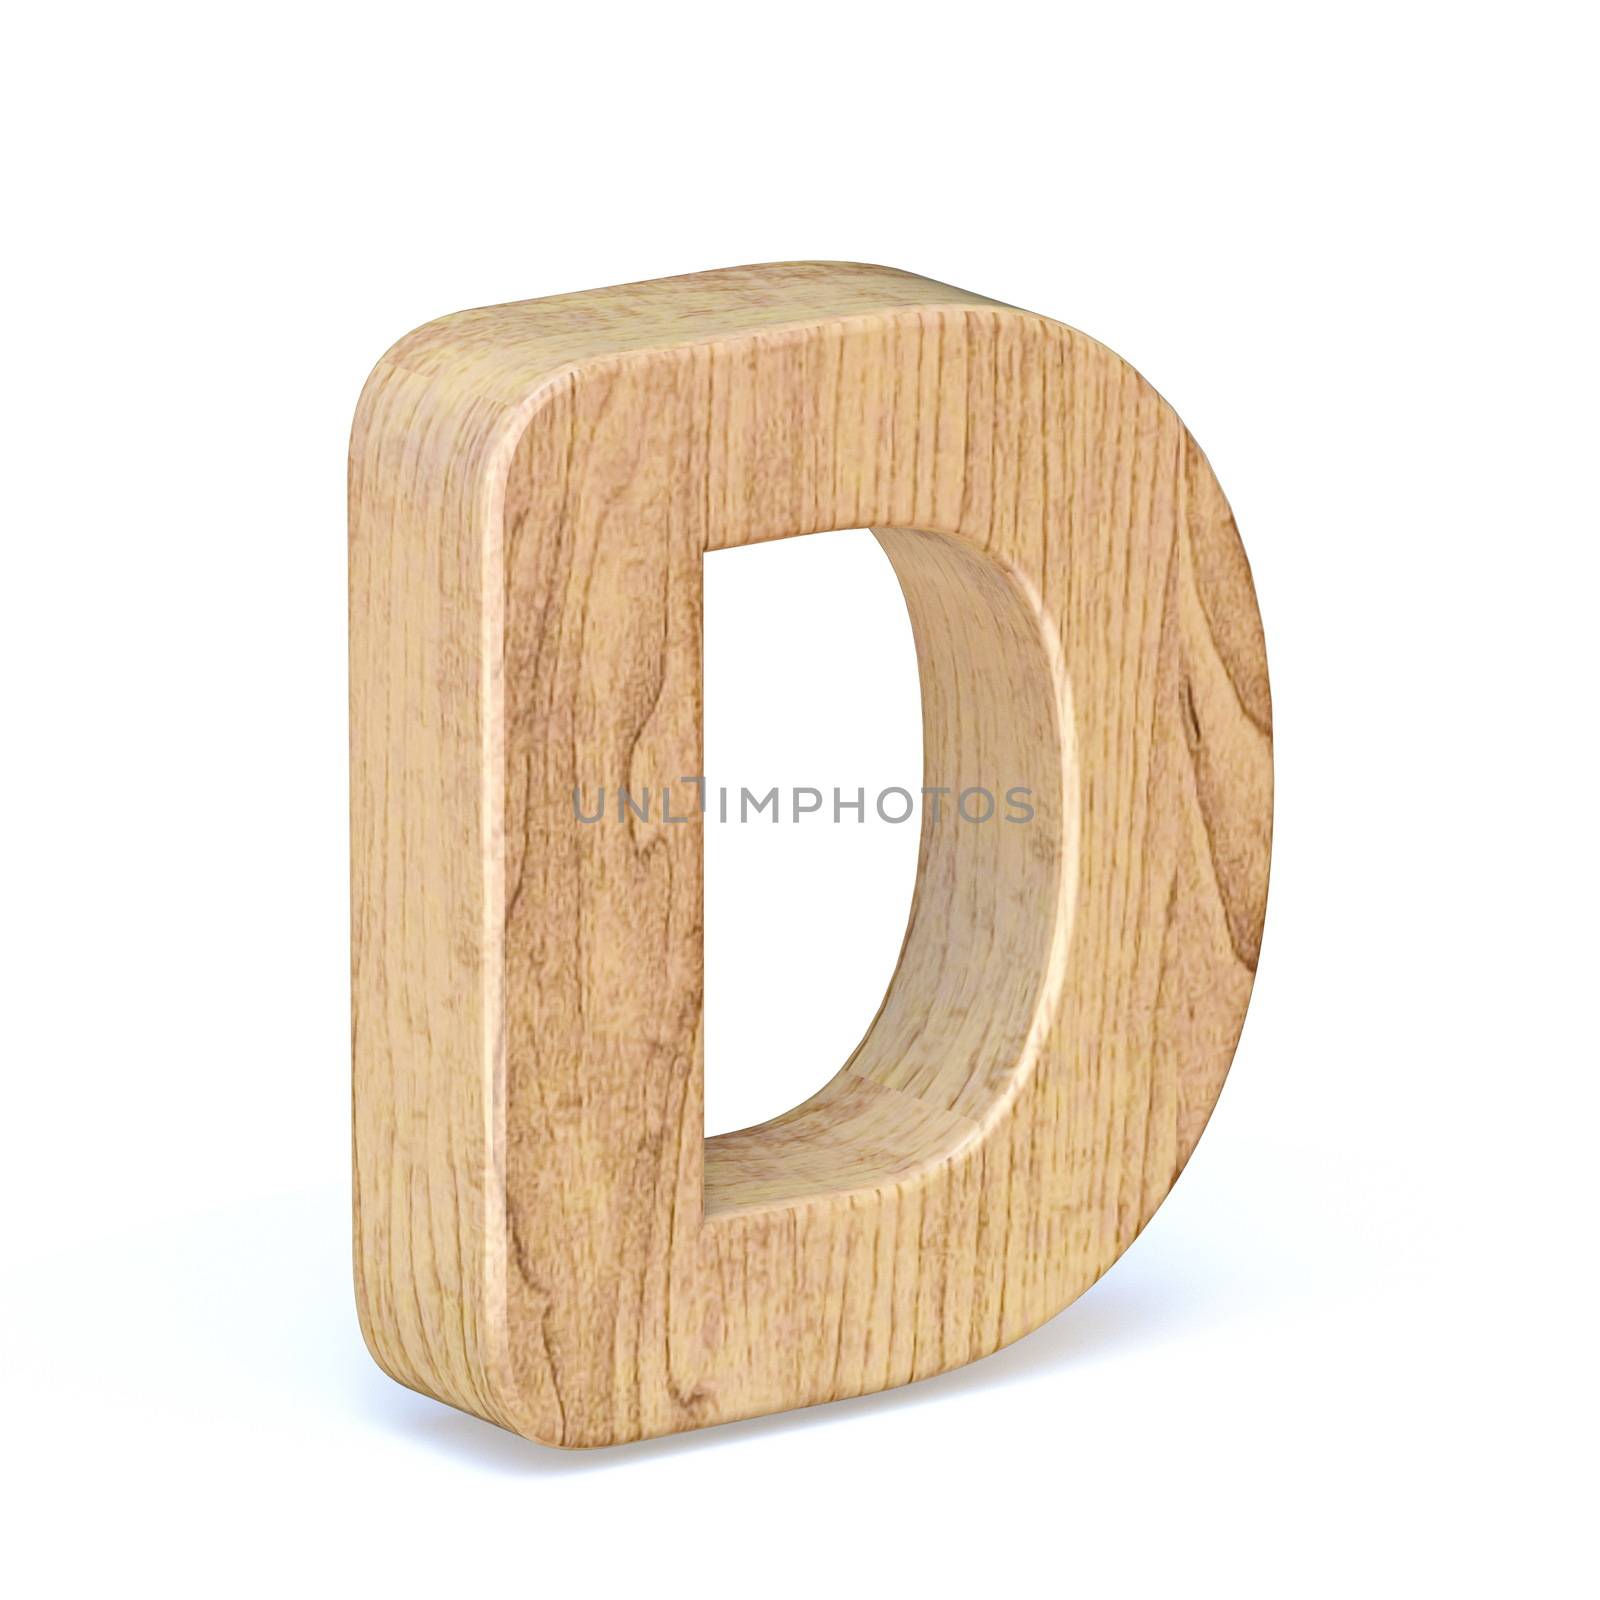 Rounded wooden font Letter D 3D render illustration isolated on white background